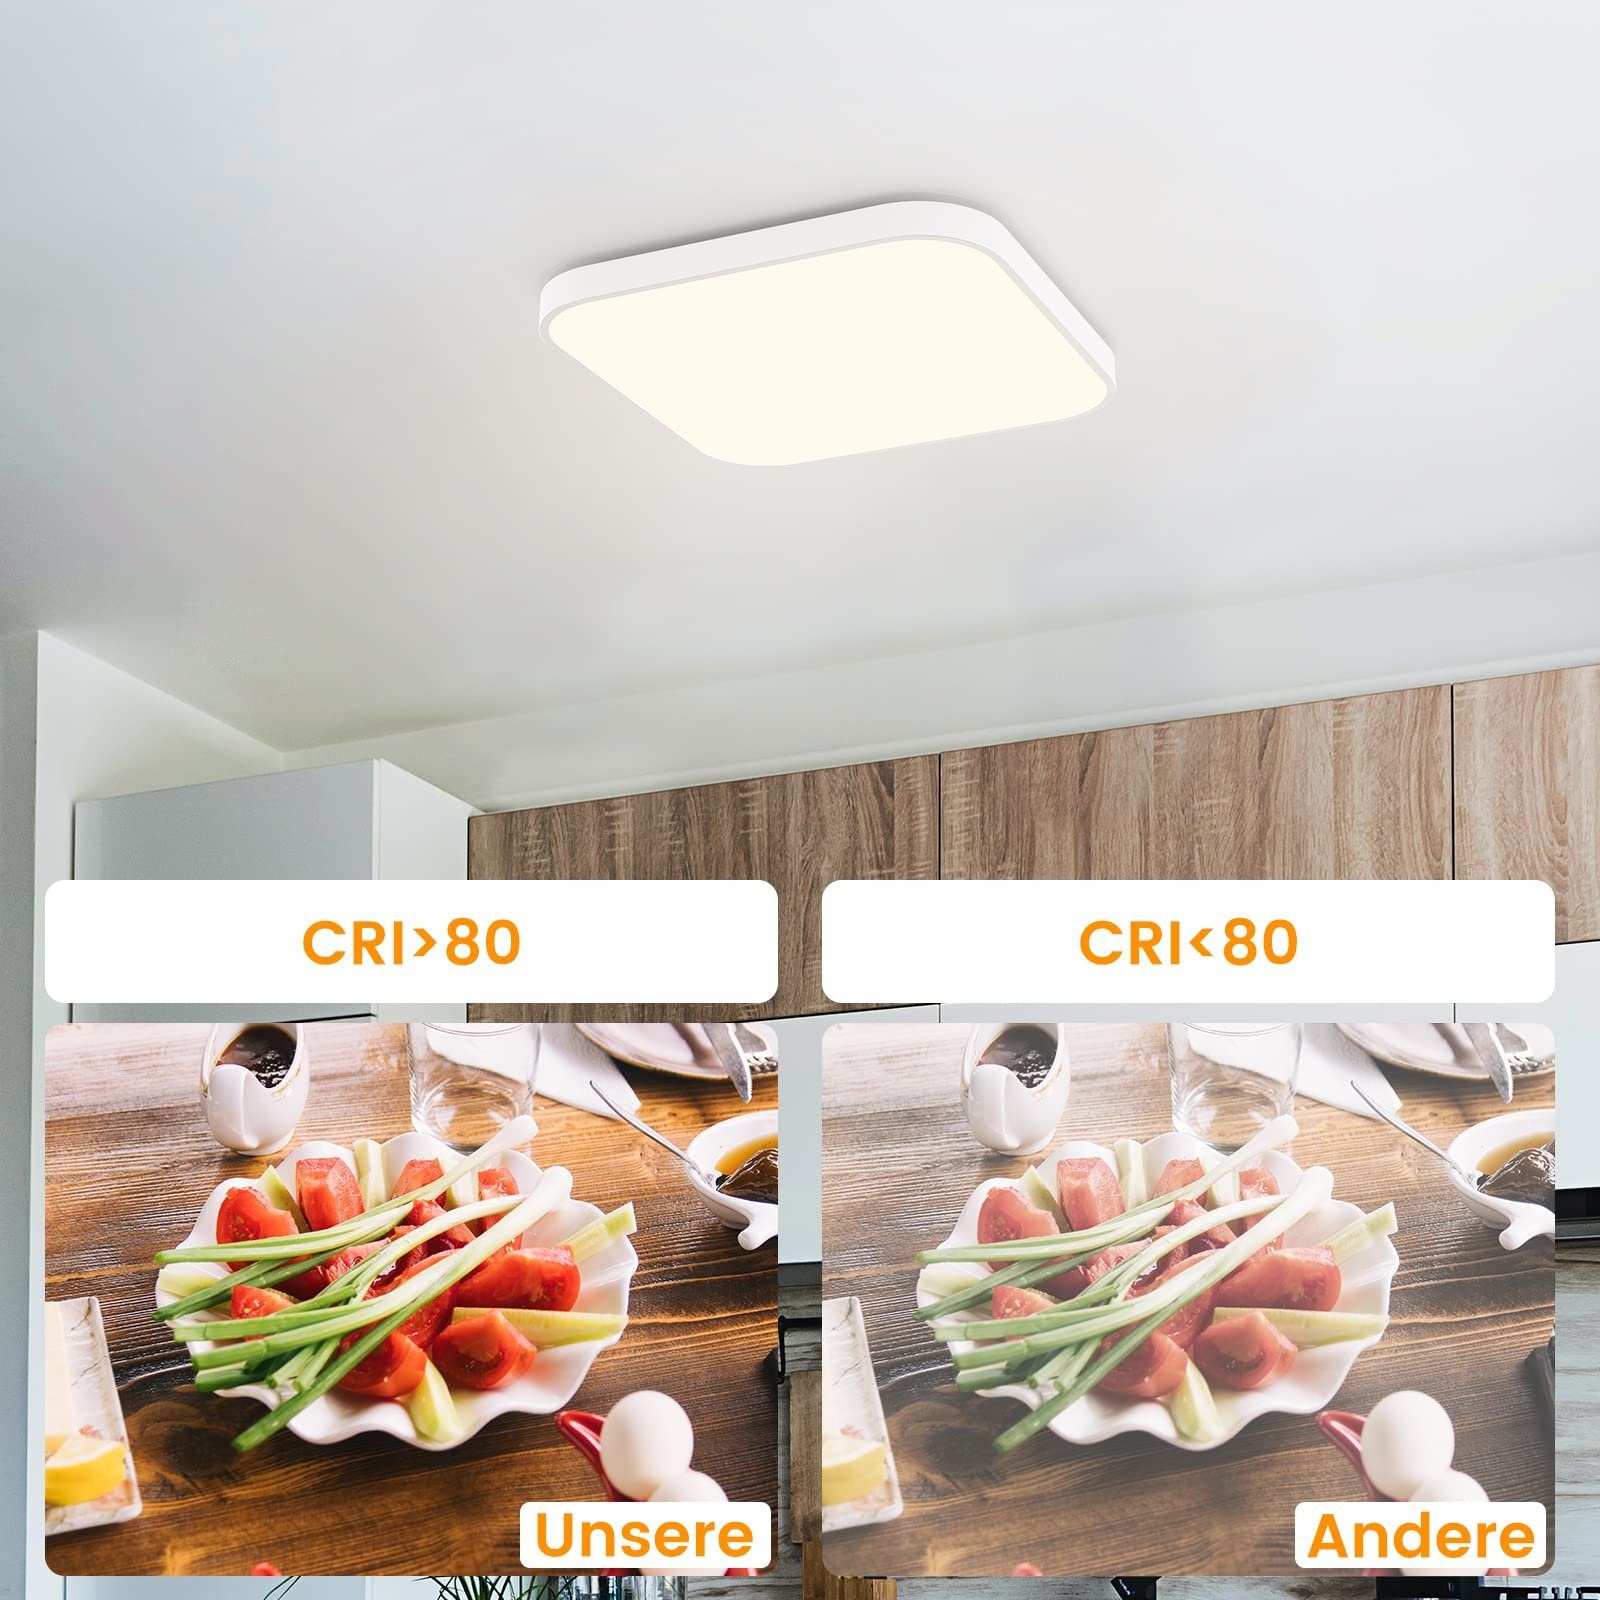 ZMH LED LED Deckenleuchte Weiß 27cm integriert, Quadratisch Flach IP44 fest Neutralweiß, 19W